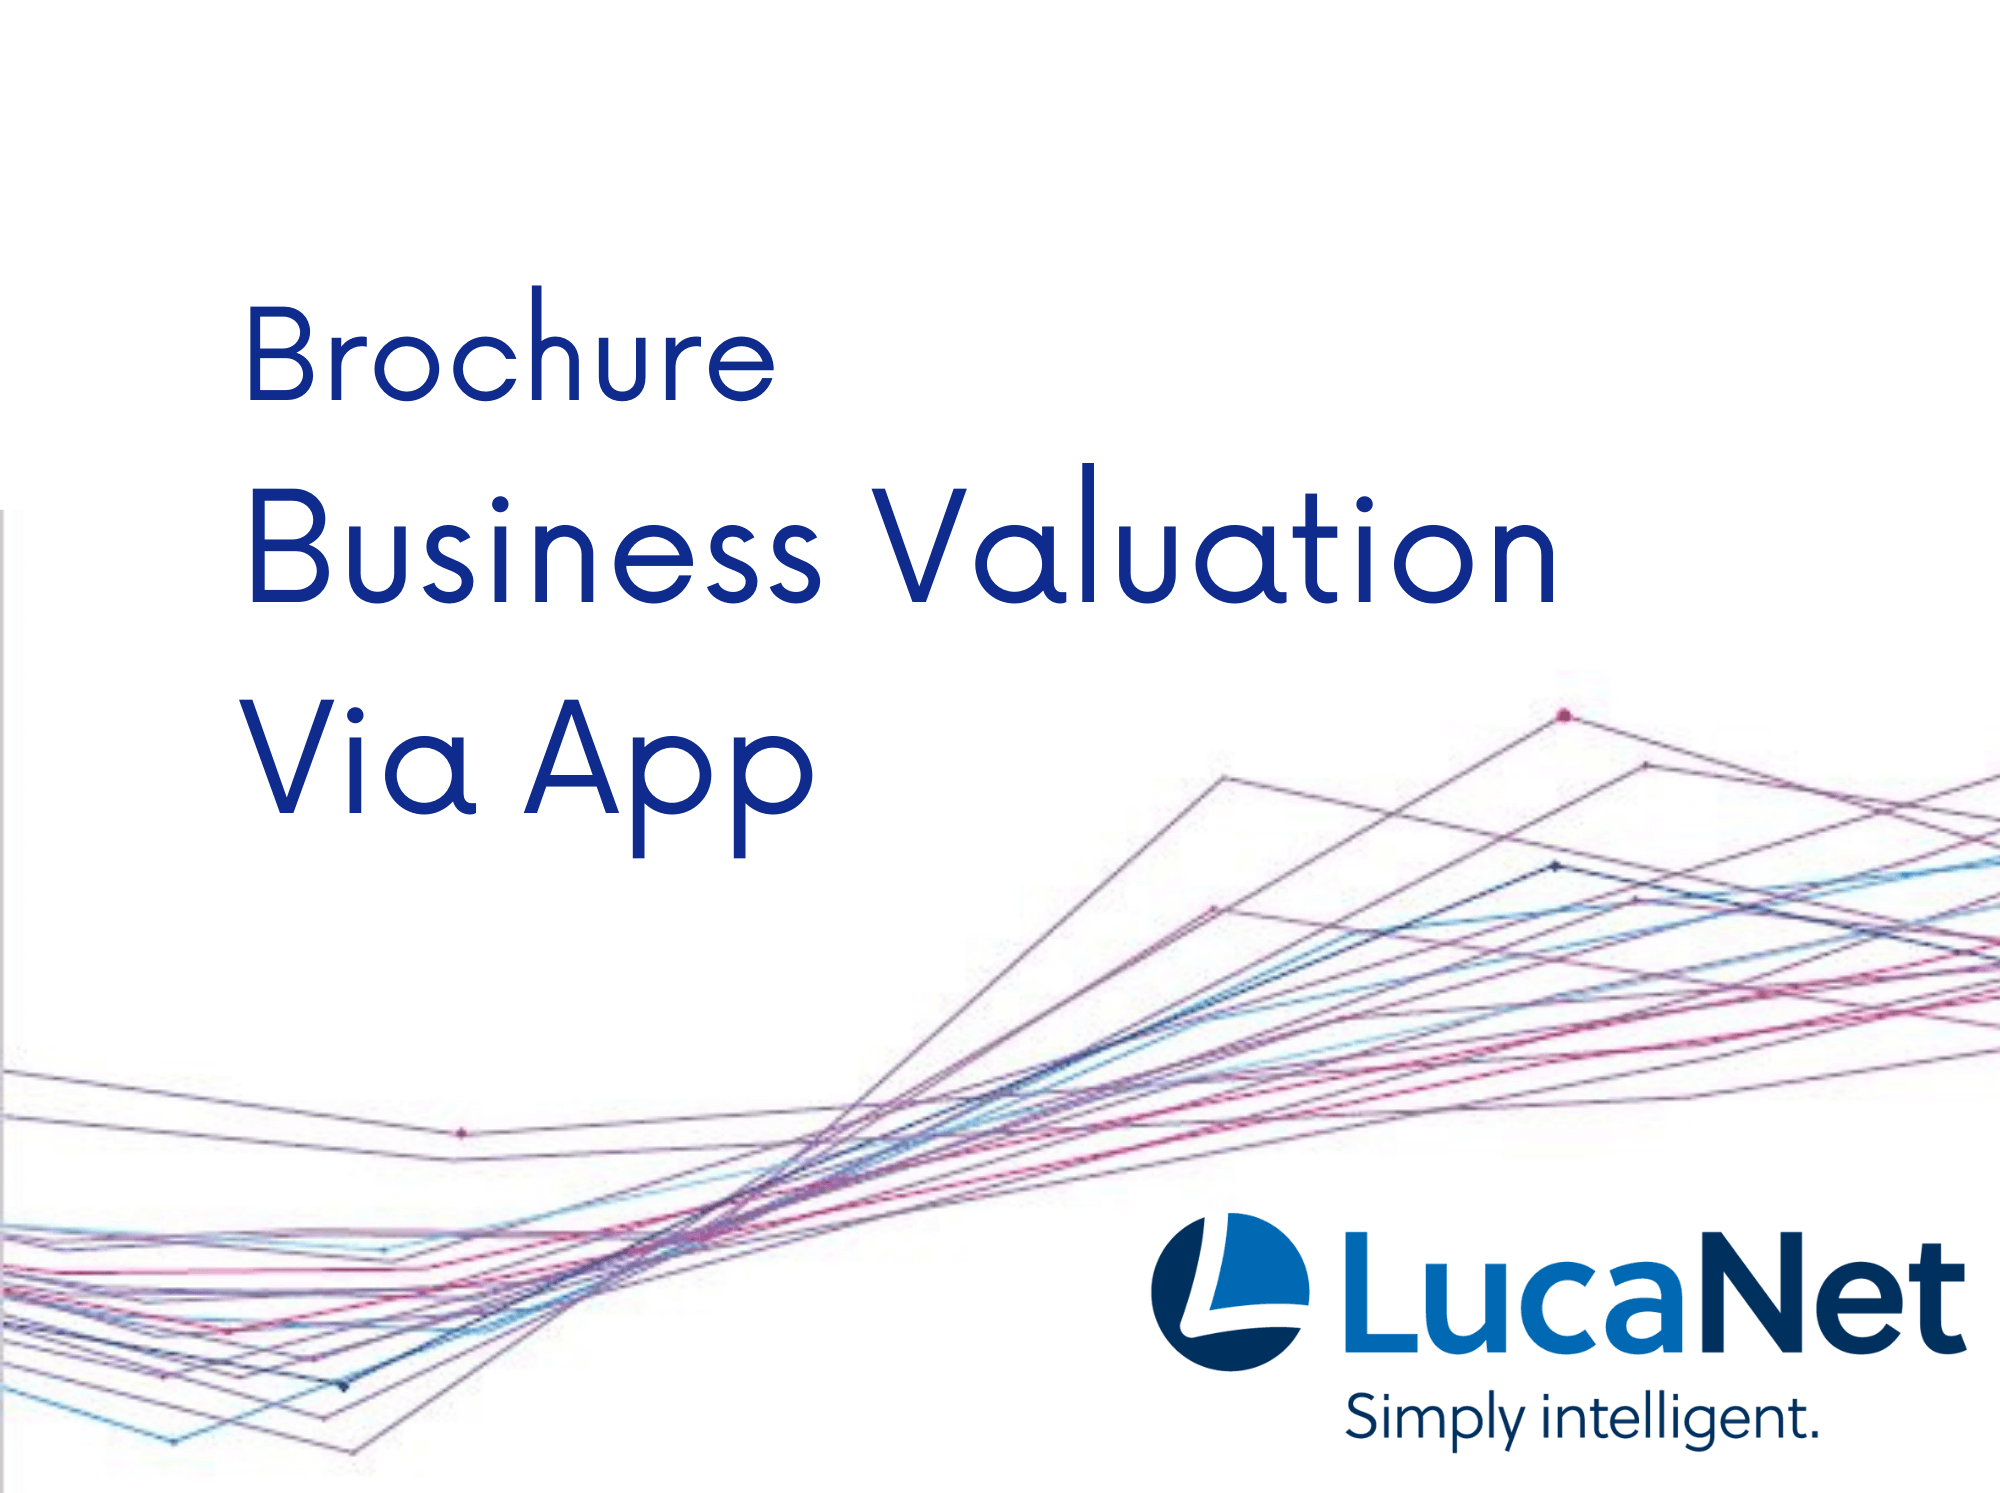 LucaNet: Brochure - Business Valuation Via App